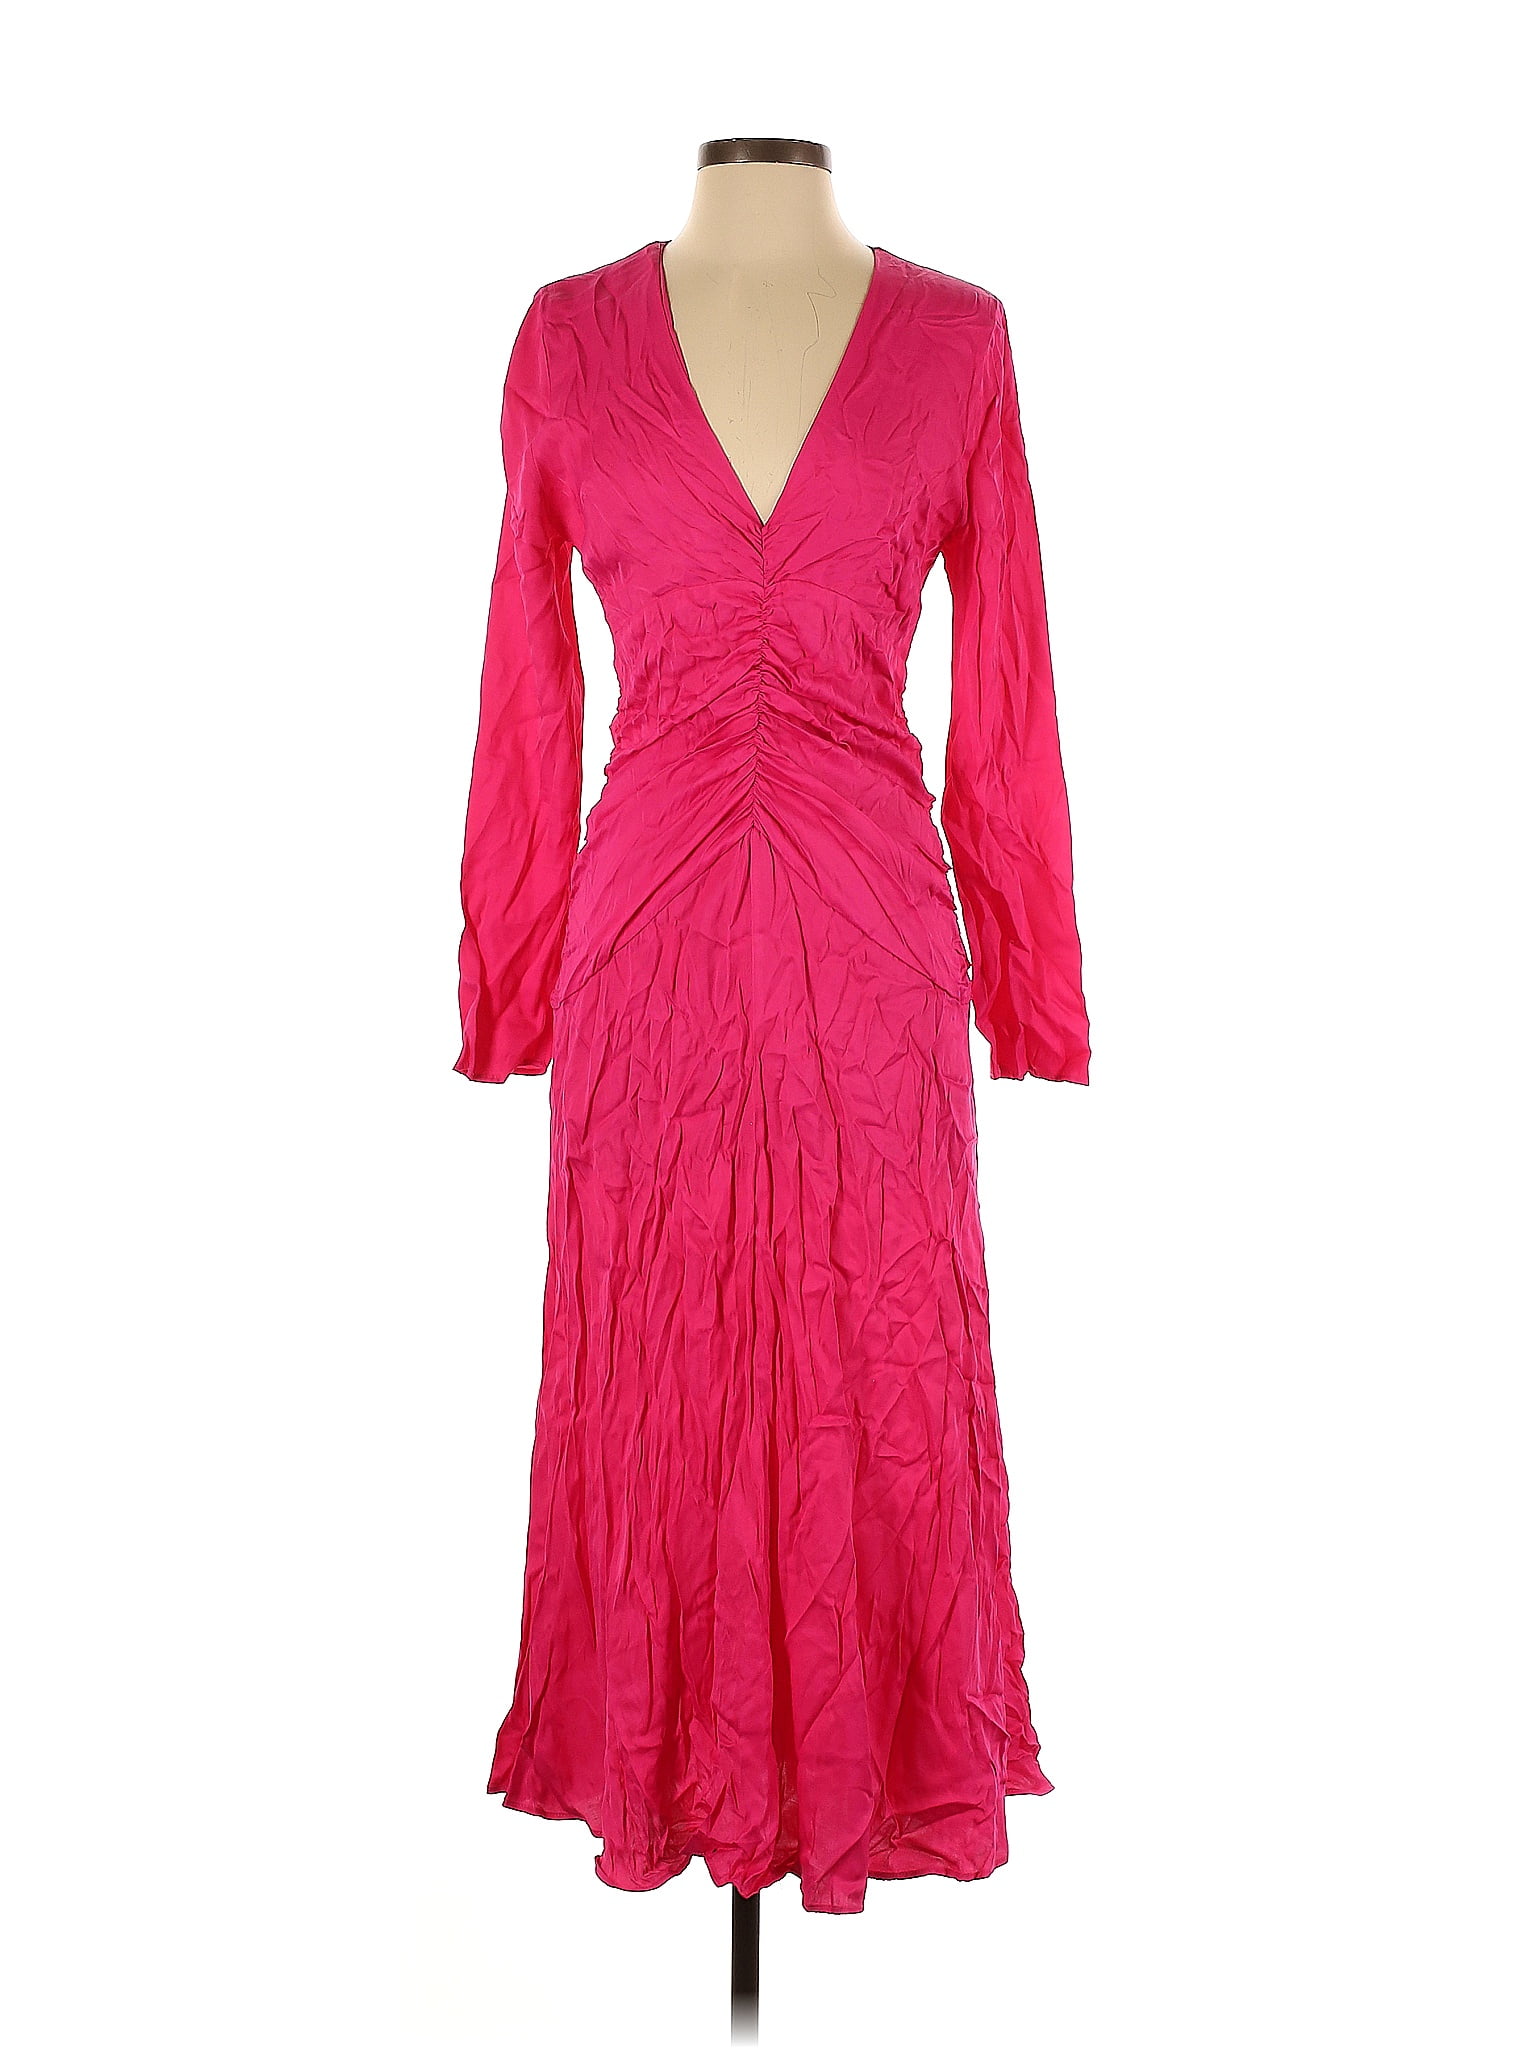 FARM Rio 100% Viscose Pink Cocktail Dress Size S - 62% off | thredUP